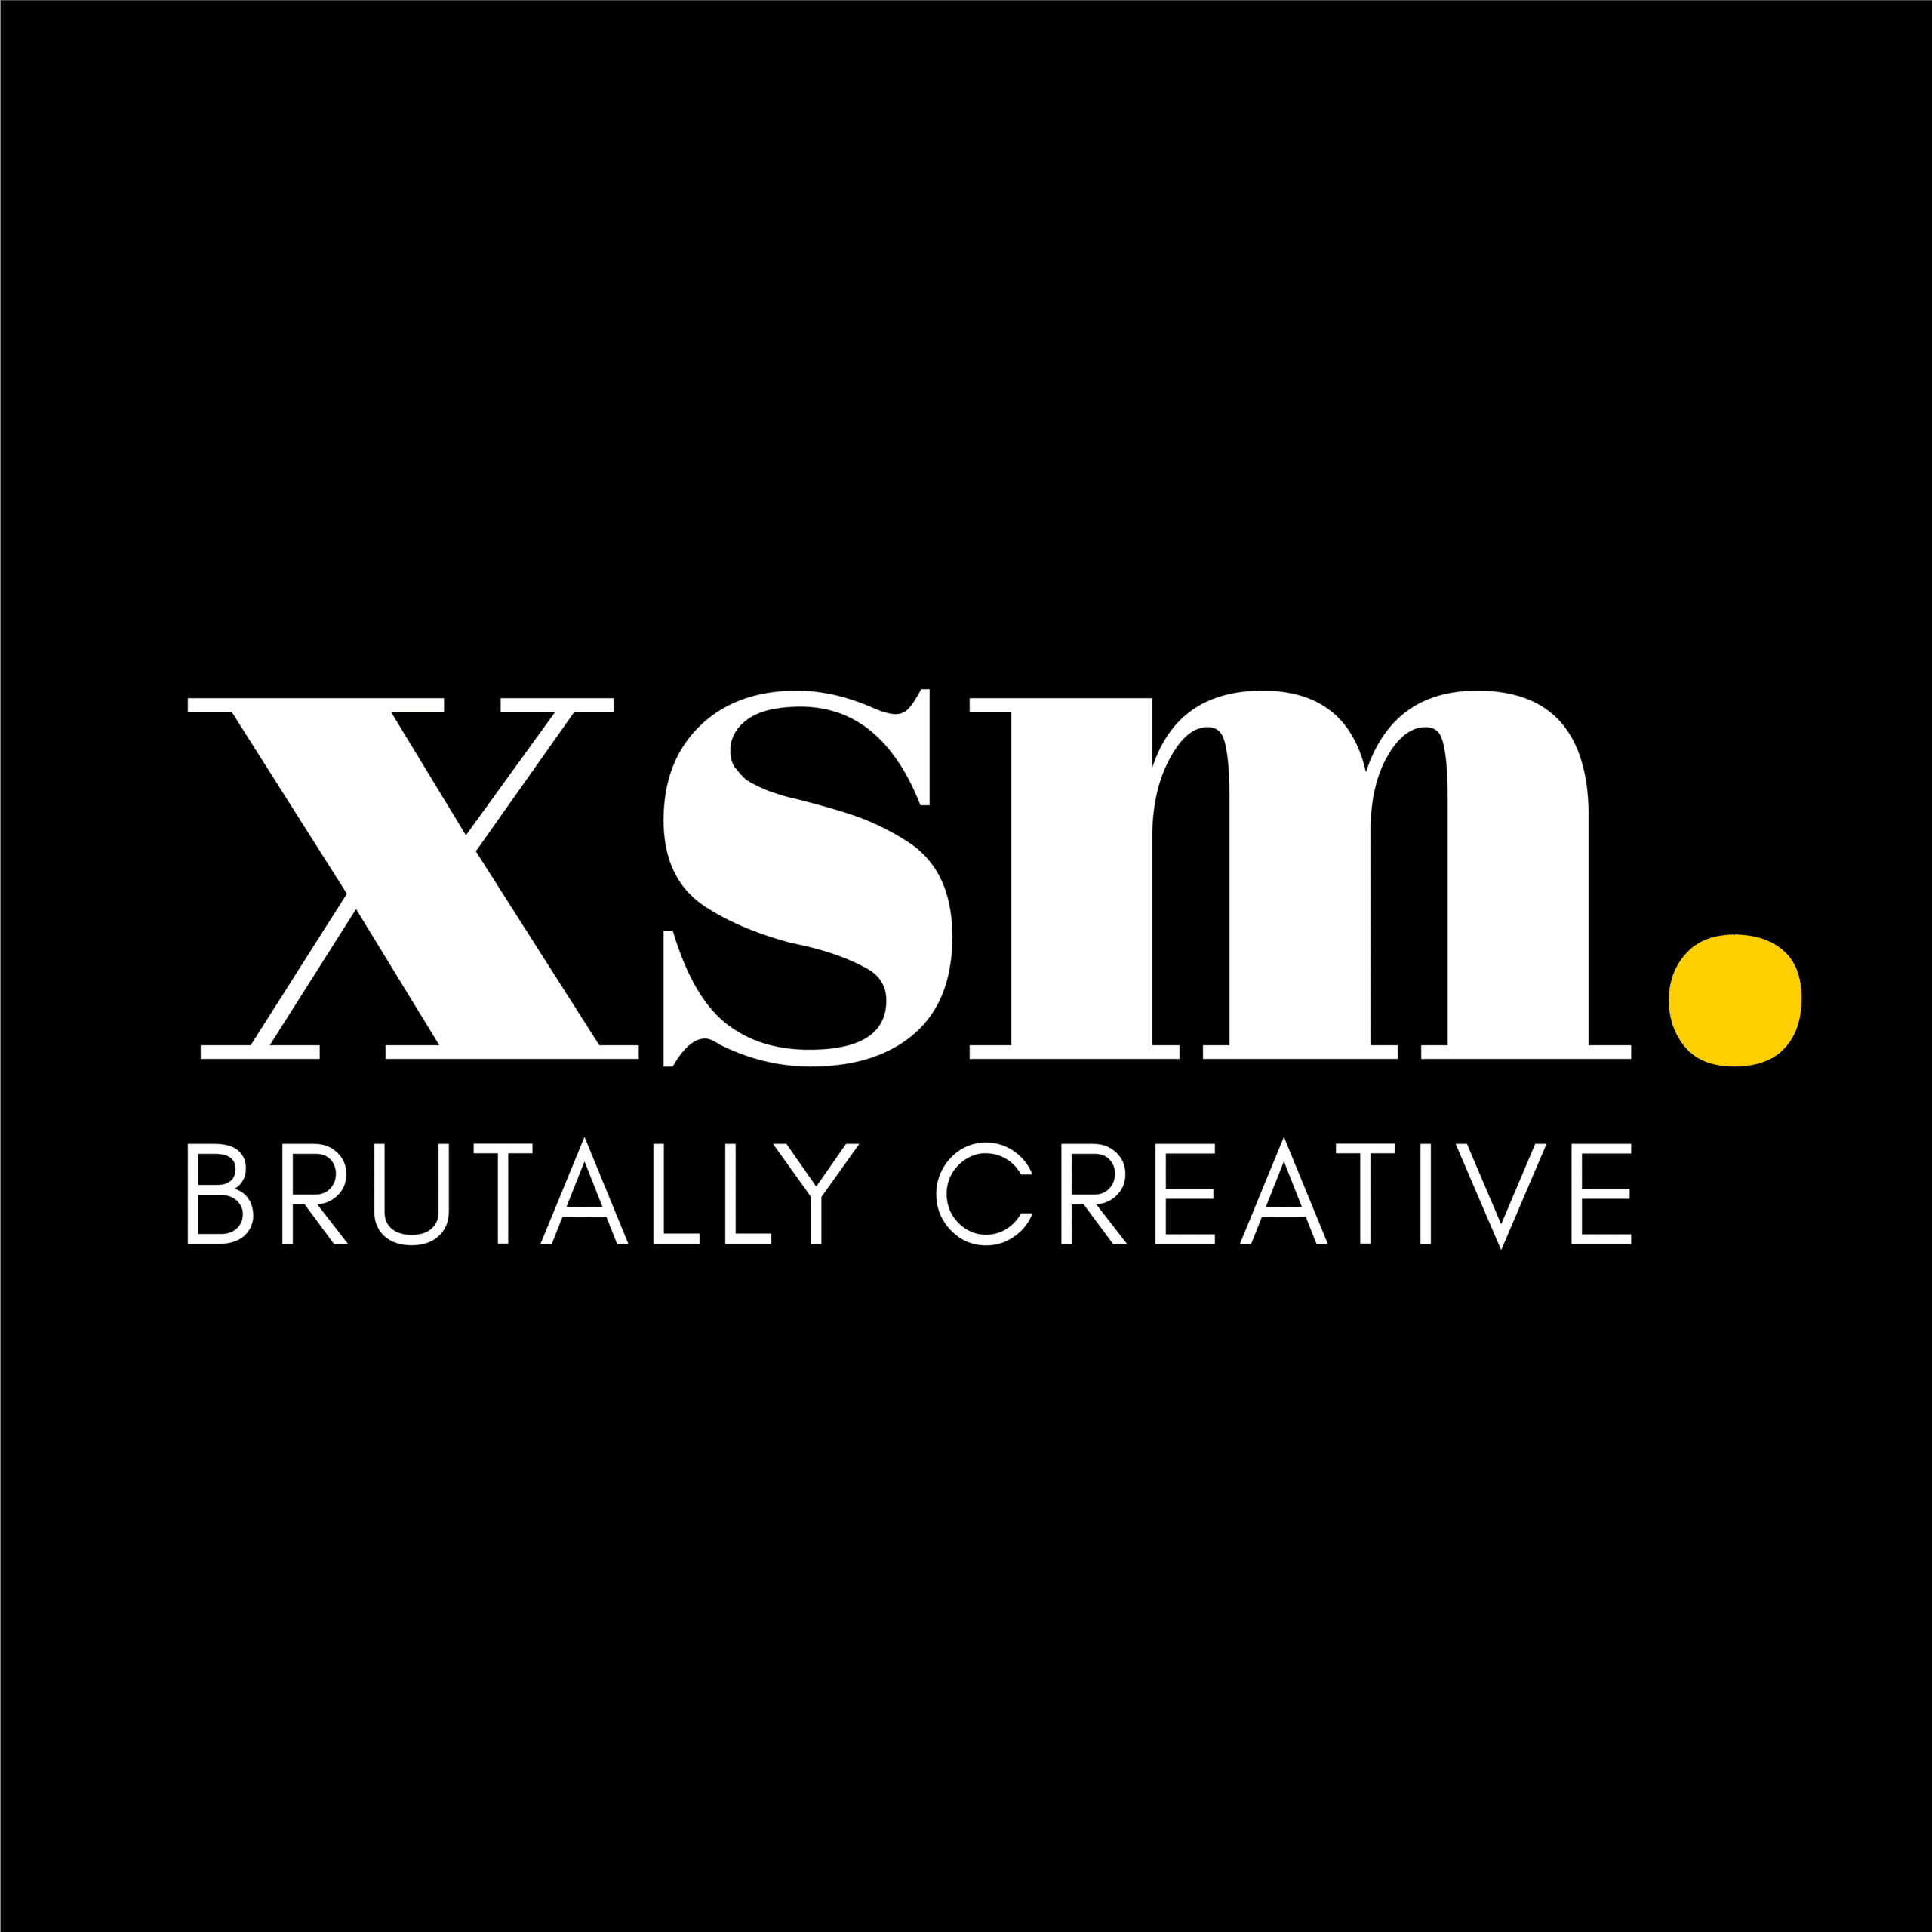 XS Multimedia